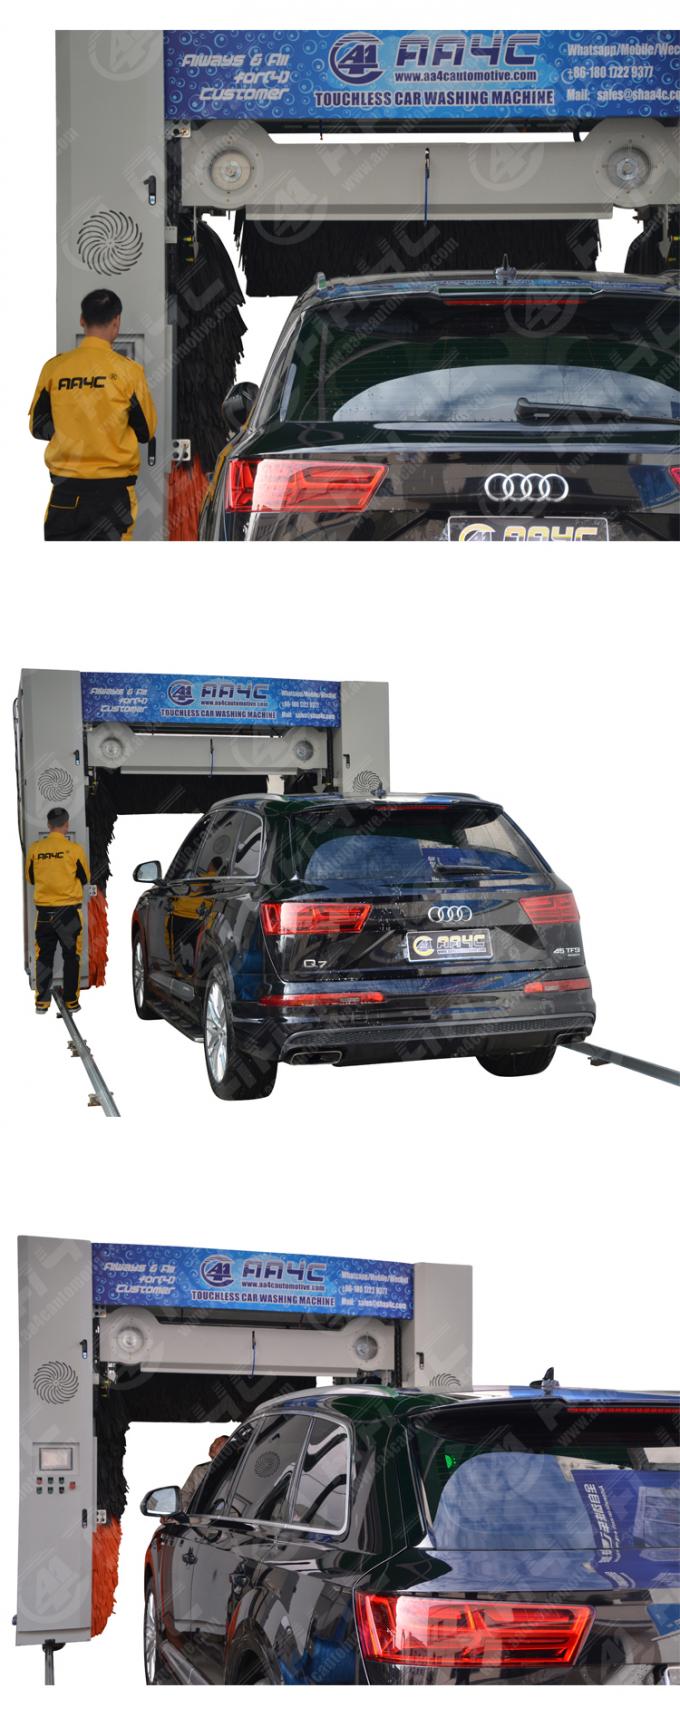 AA4C πλήρως αυτόματο πλυντήριο υψηλών αυτοκινήτων συστημάτων πλυντηρίων αυτοκινήτων λύσης συσκευασίας εξοπλισμών καταστημάτων πλύσης αυτοκινήτων